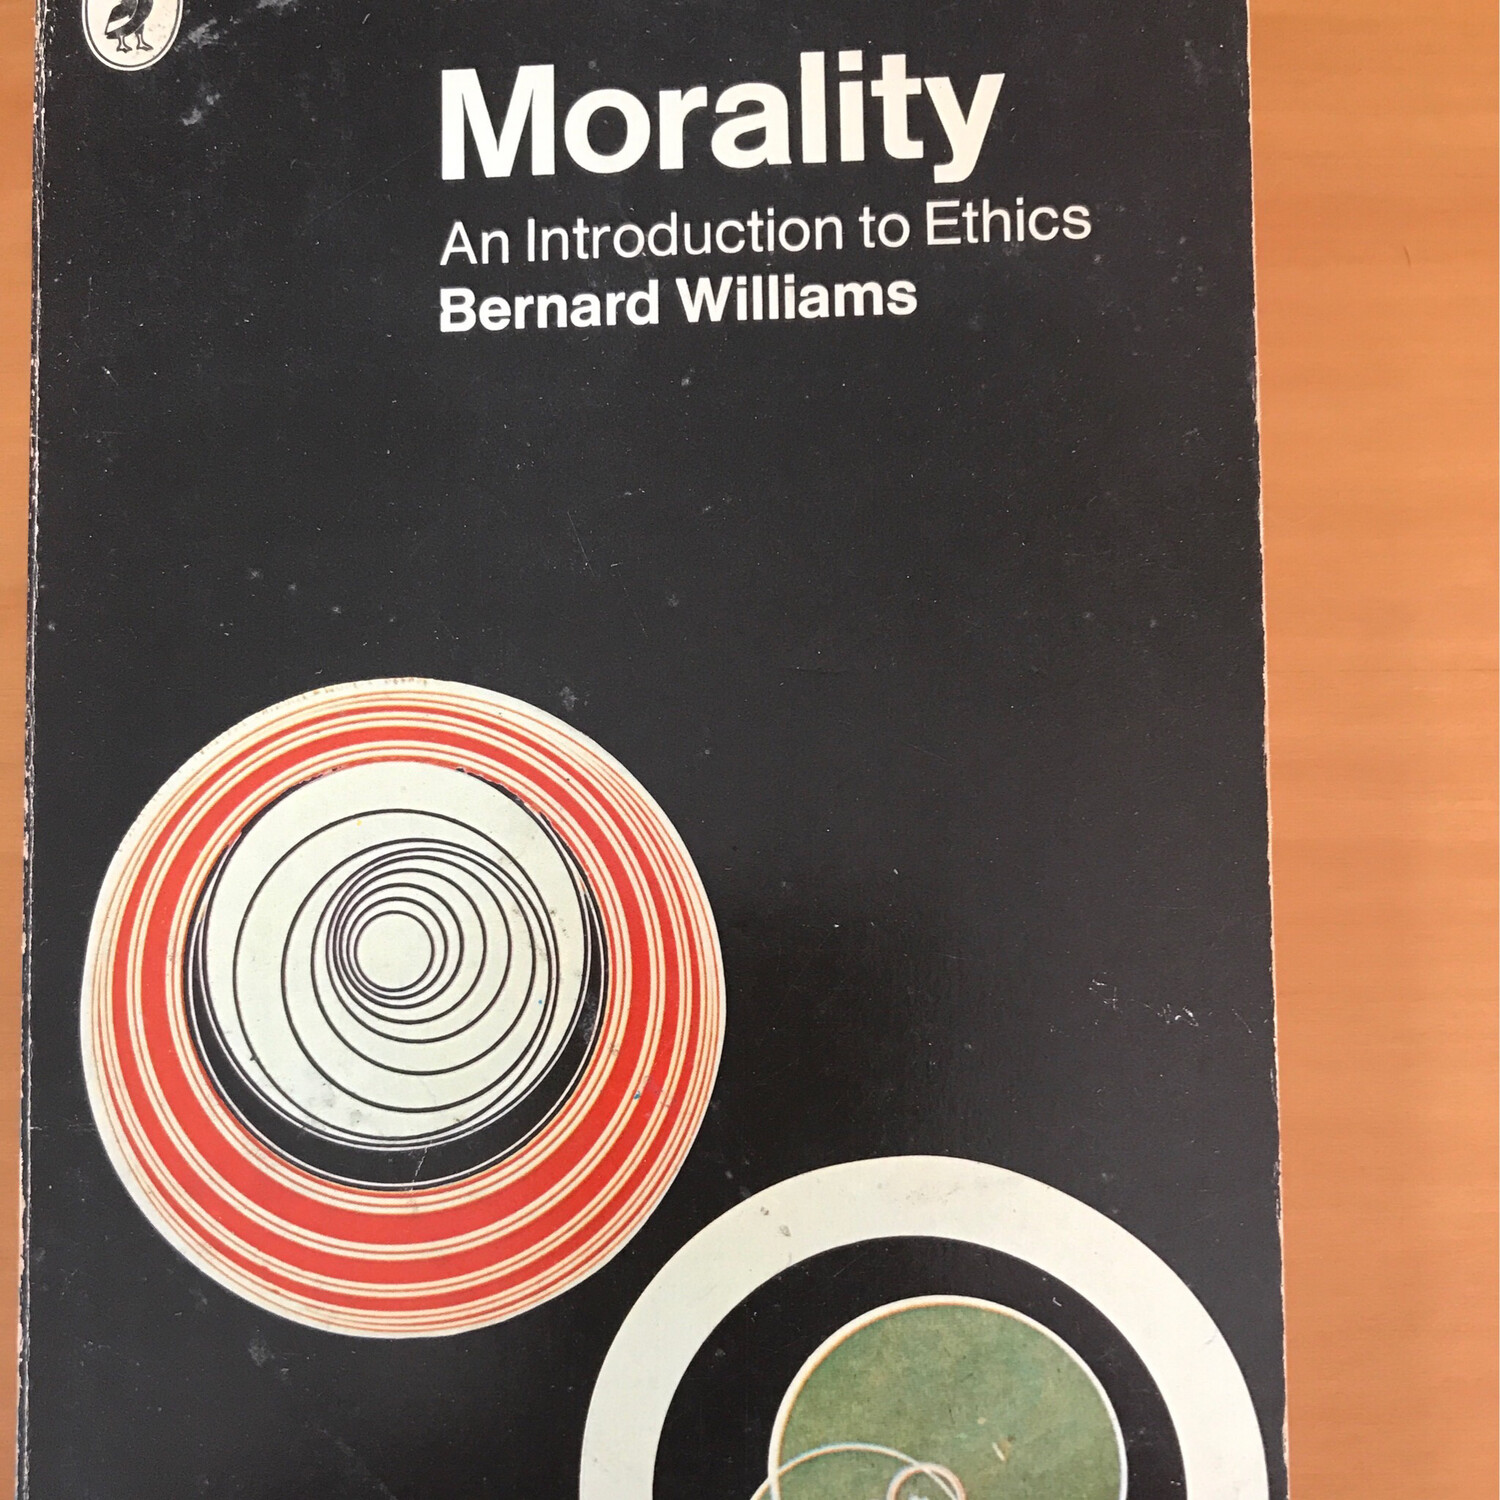 Morality, Bernard Williams